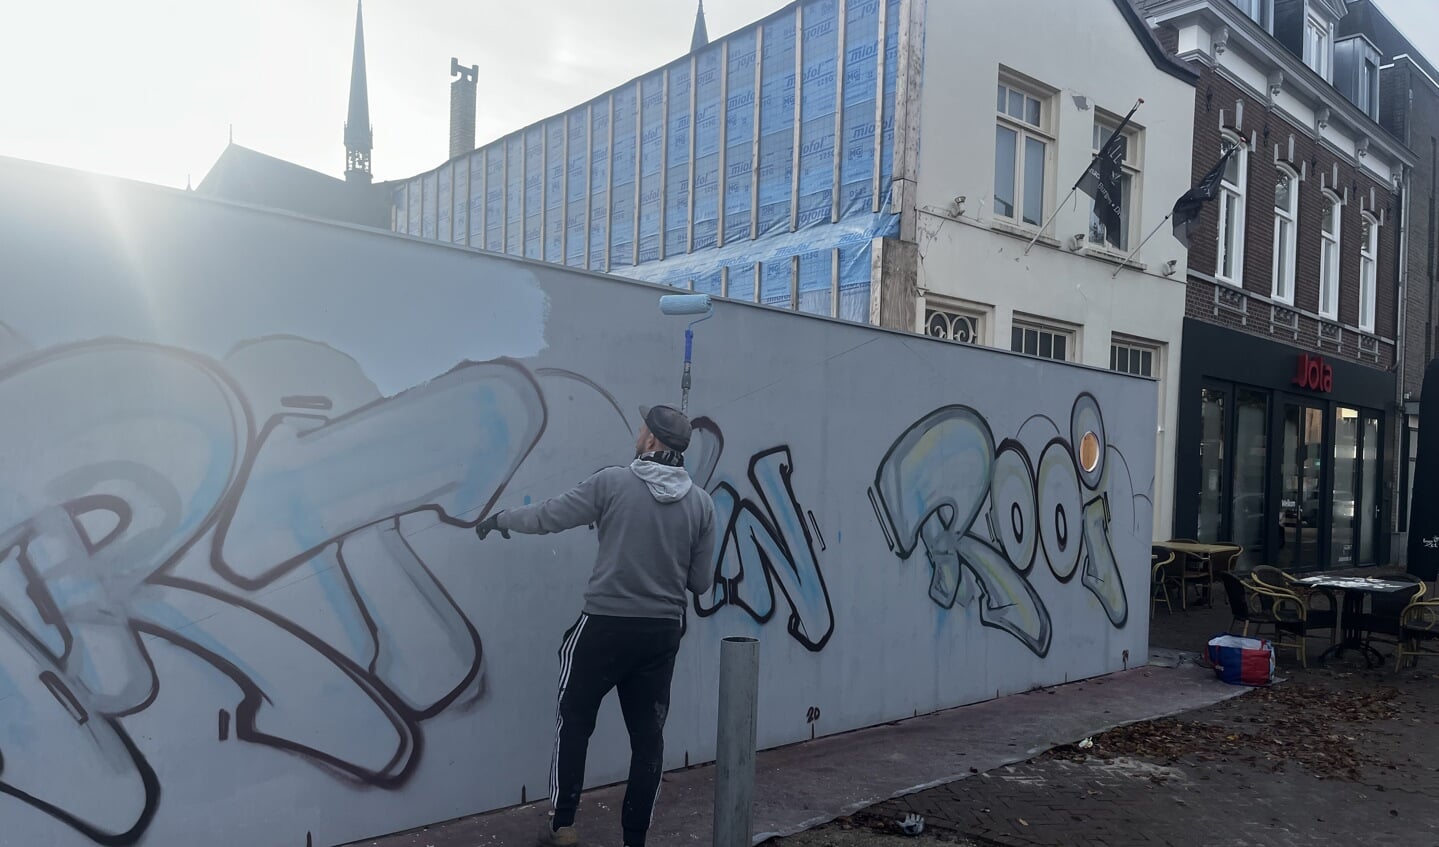 muurschildering van stiphout,  graffiti, artiesten:Vincent Huibers en Werner Zwakhalen